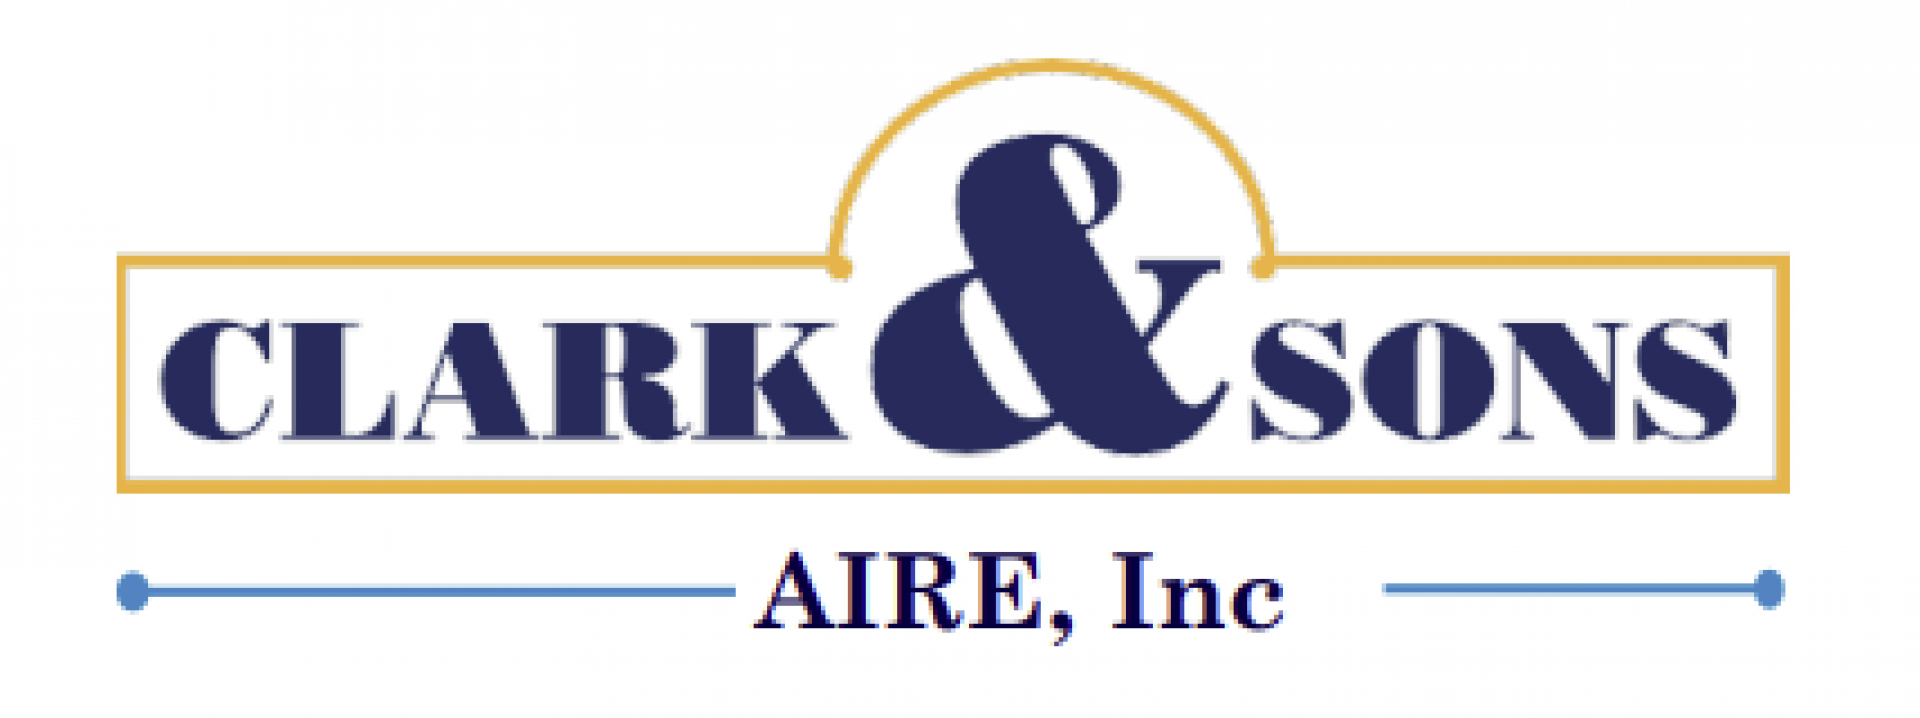 Clark & Sons Aire, Inc. company logo